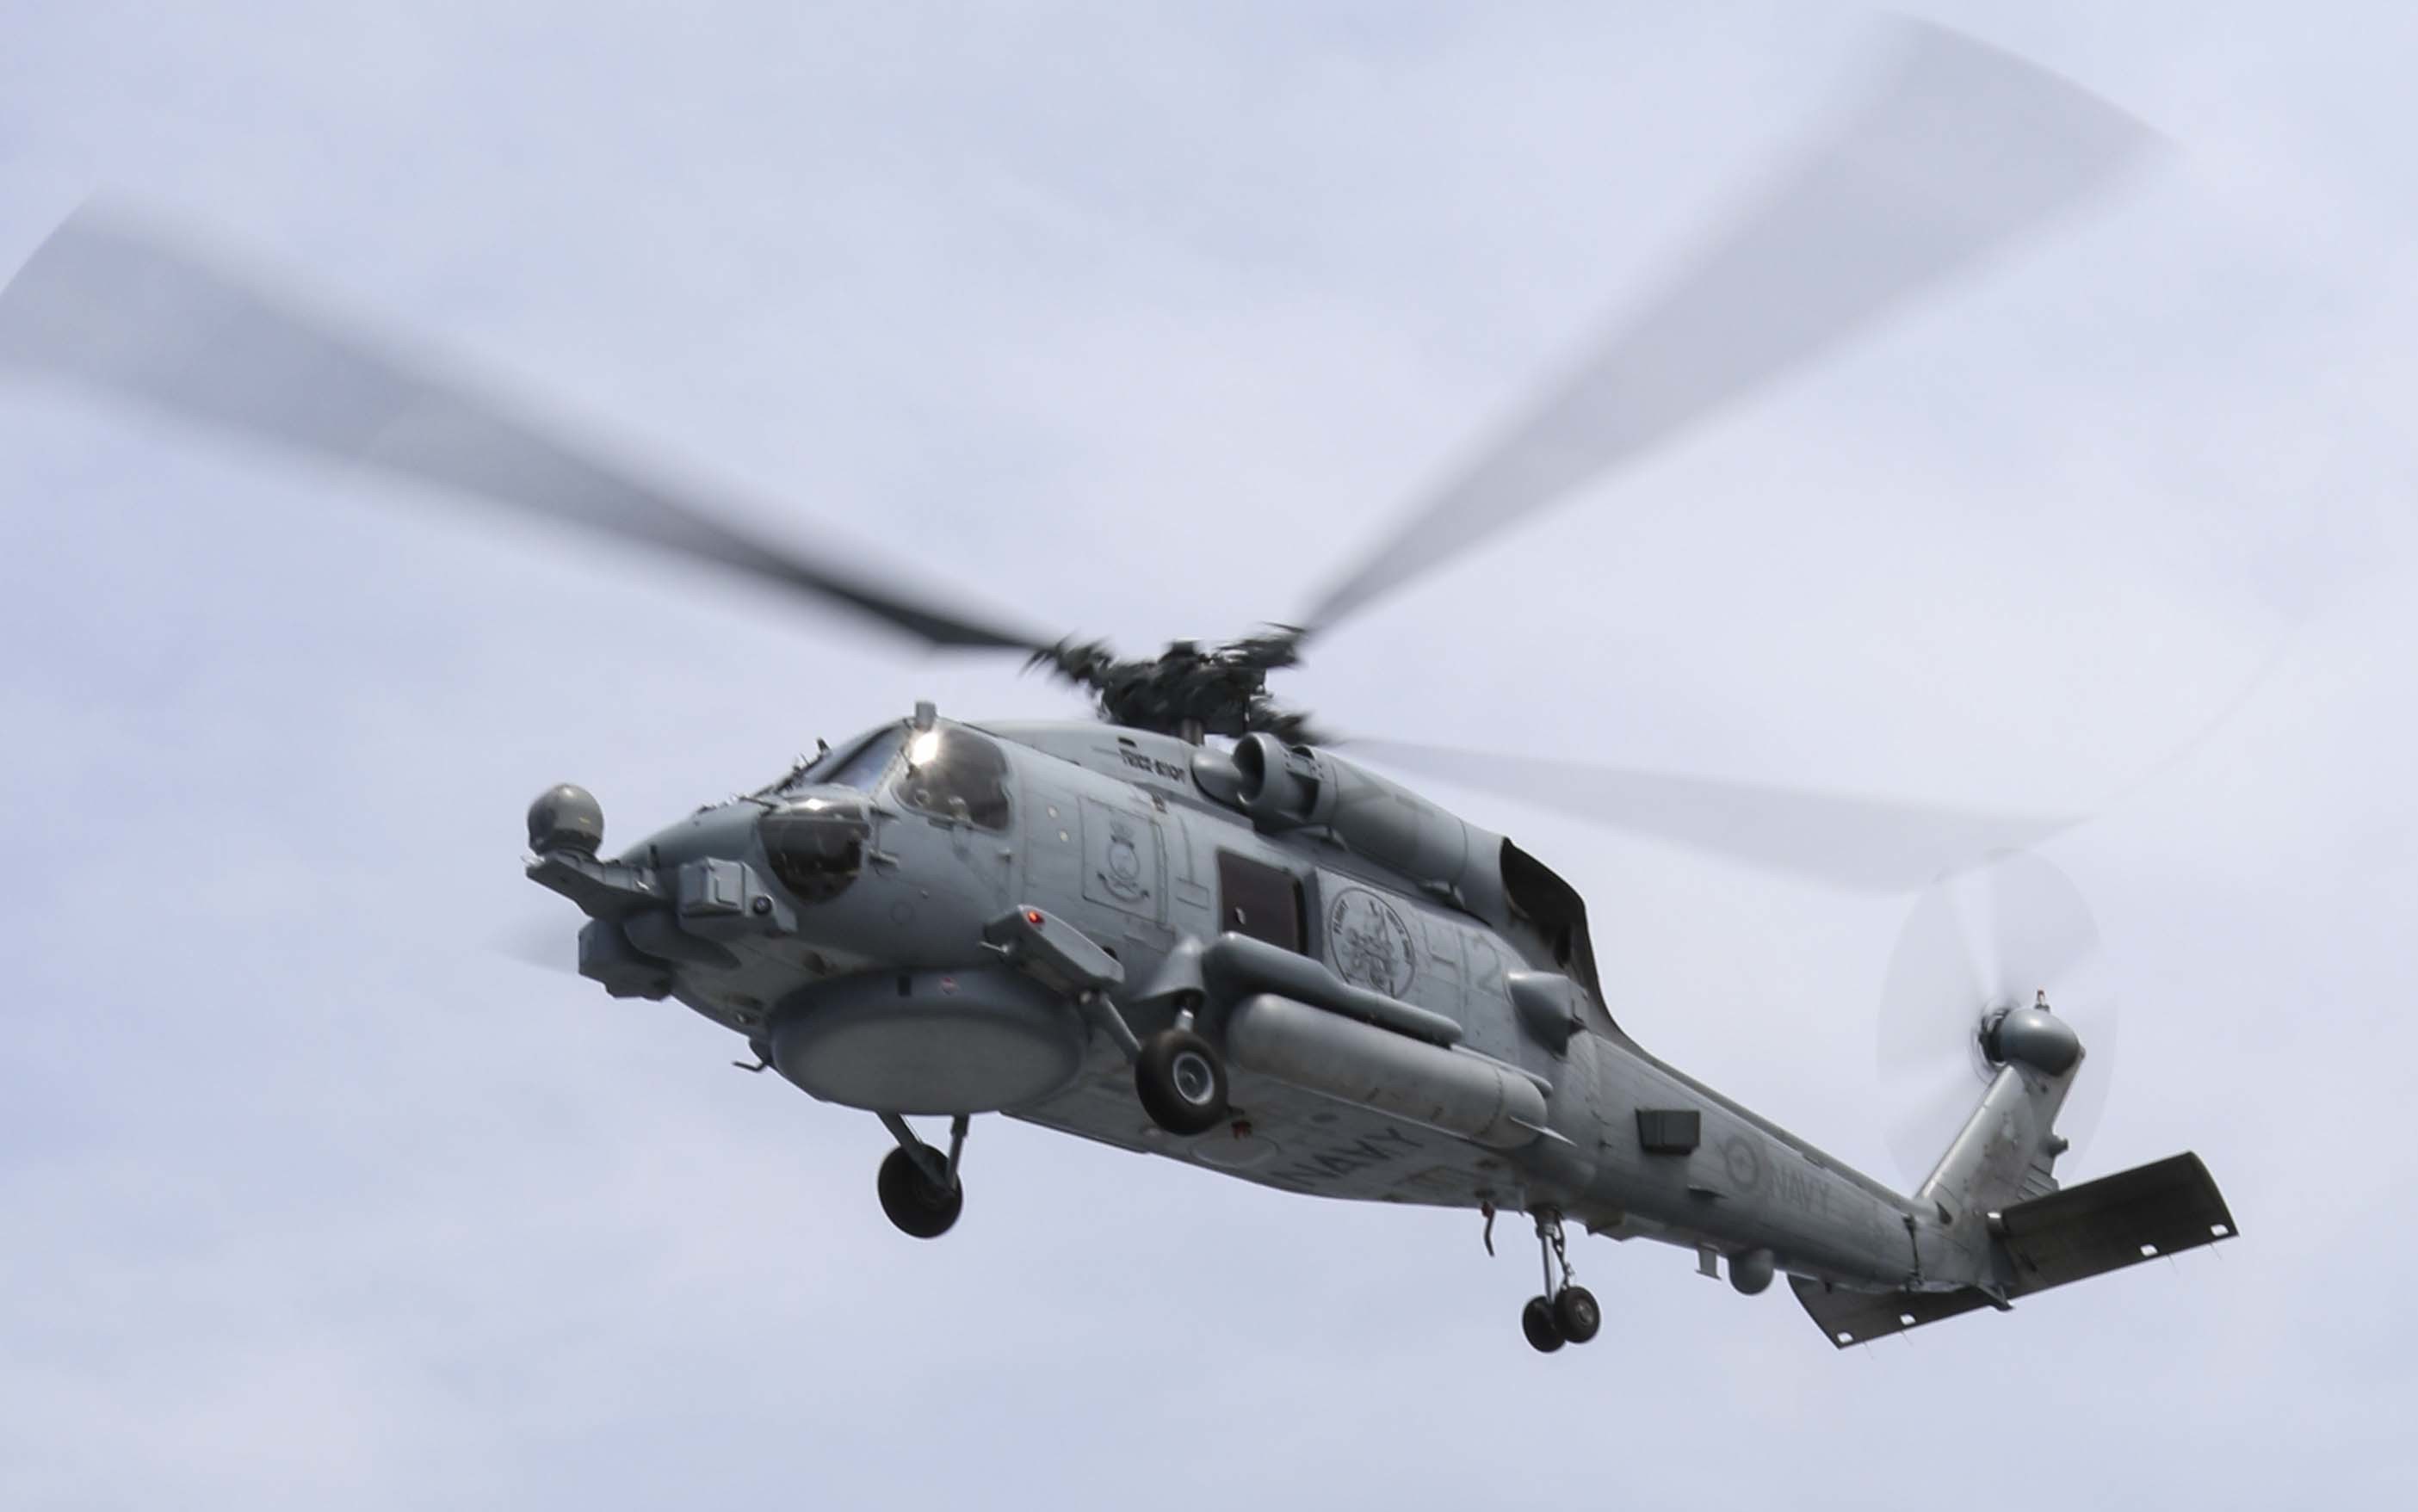 File:Royal Australian Navy MH-60R Seahawk helicopter in November 2018.jpg - Wikimedia Commons